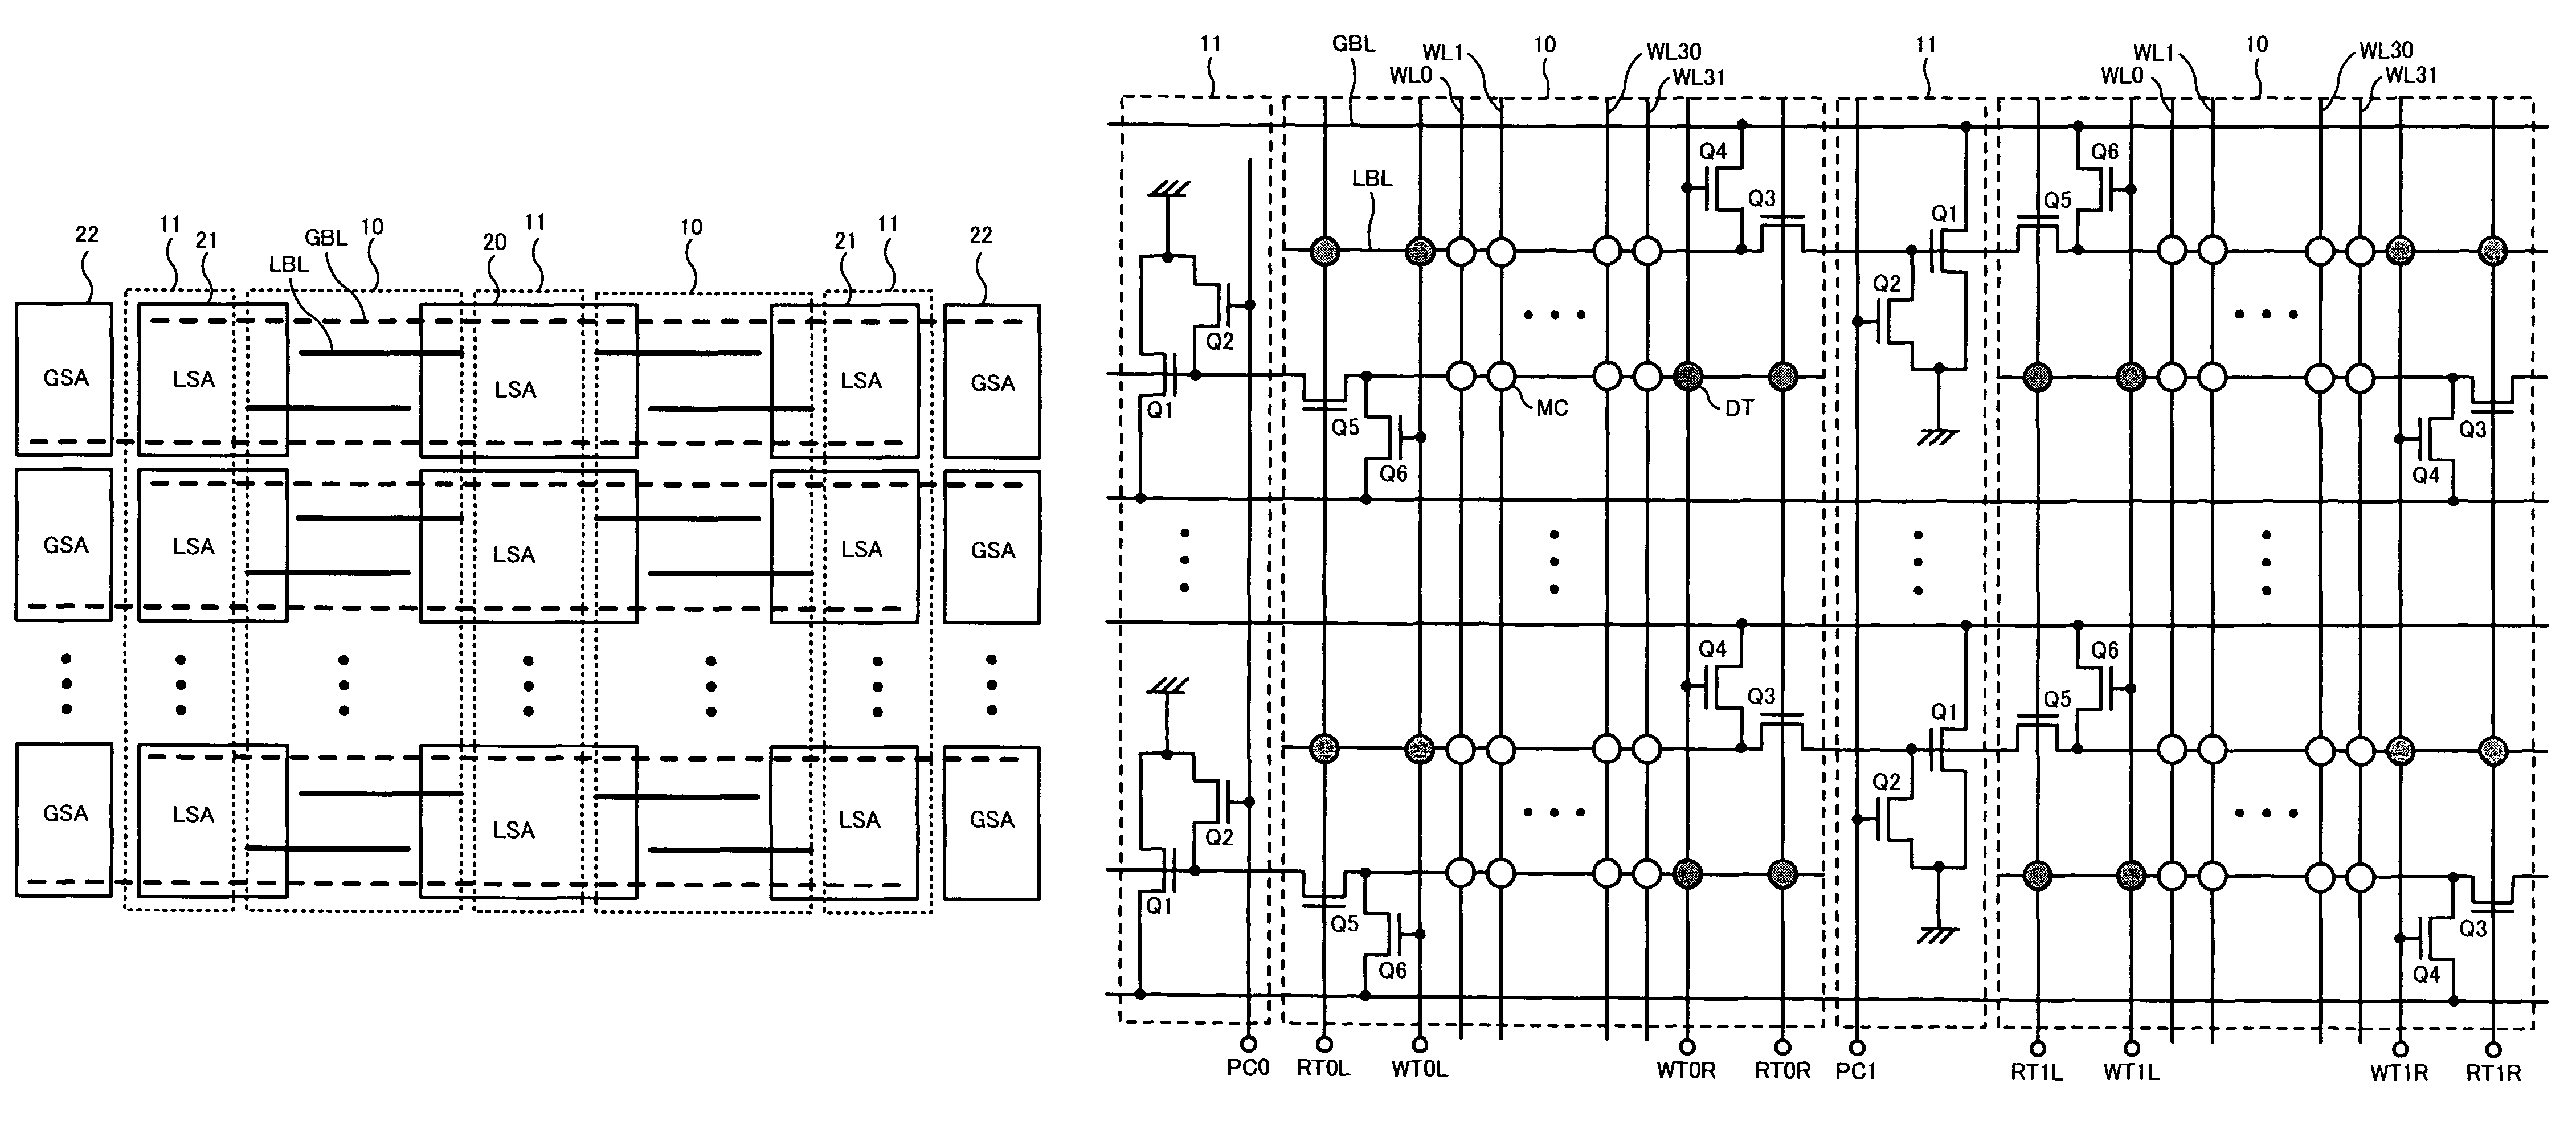 Semiconductor memory device having vertical transistors